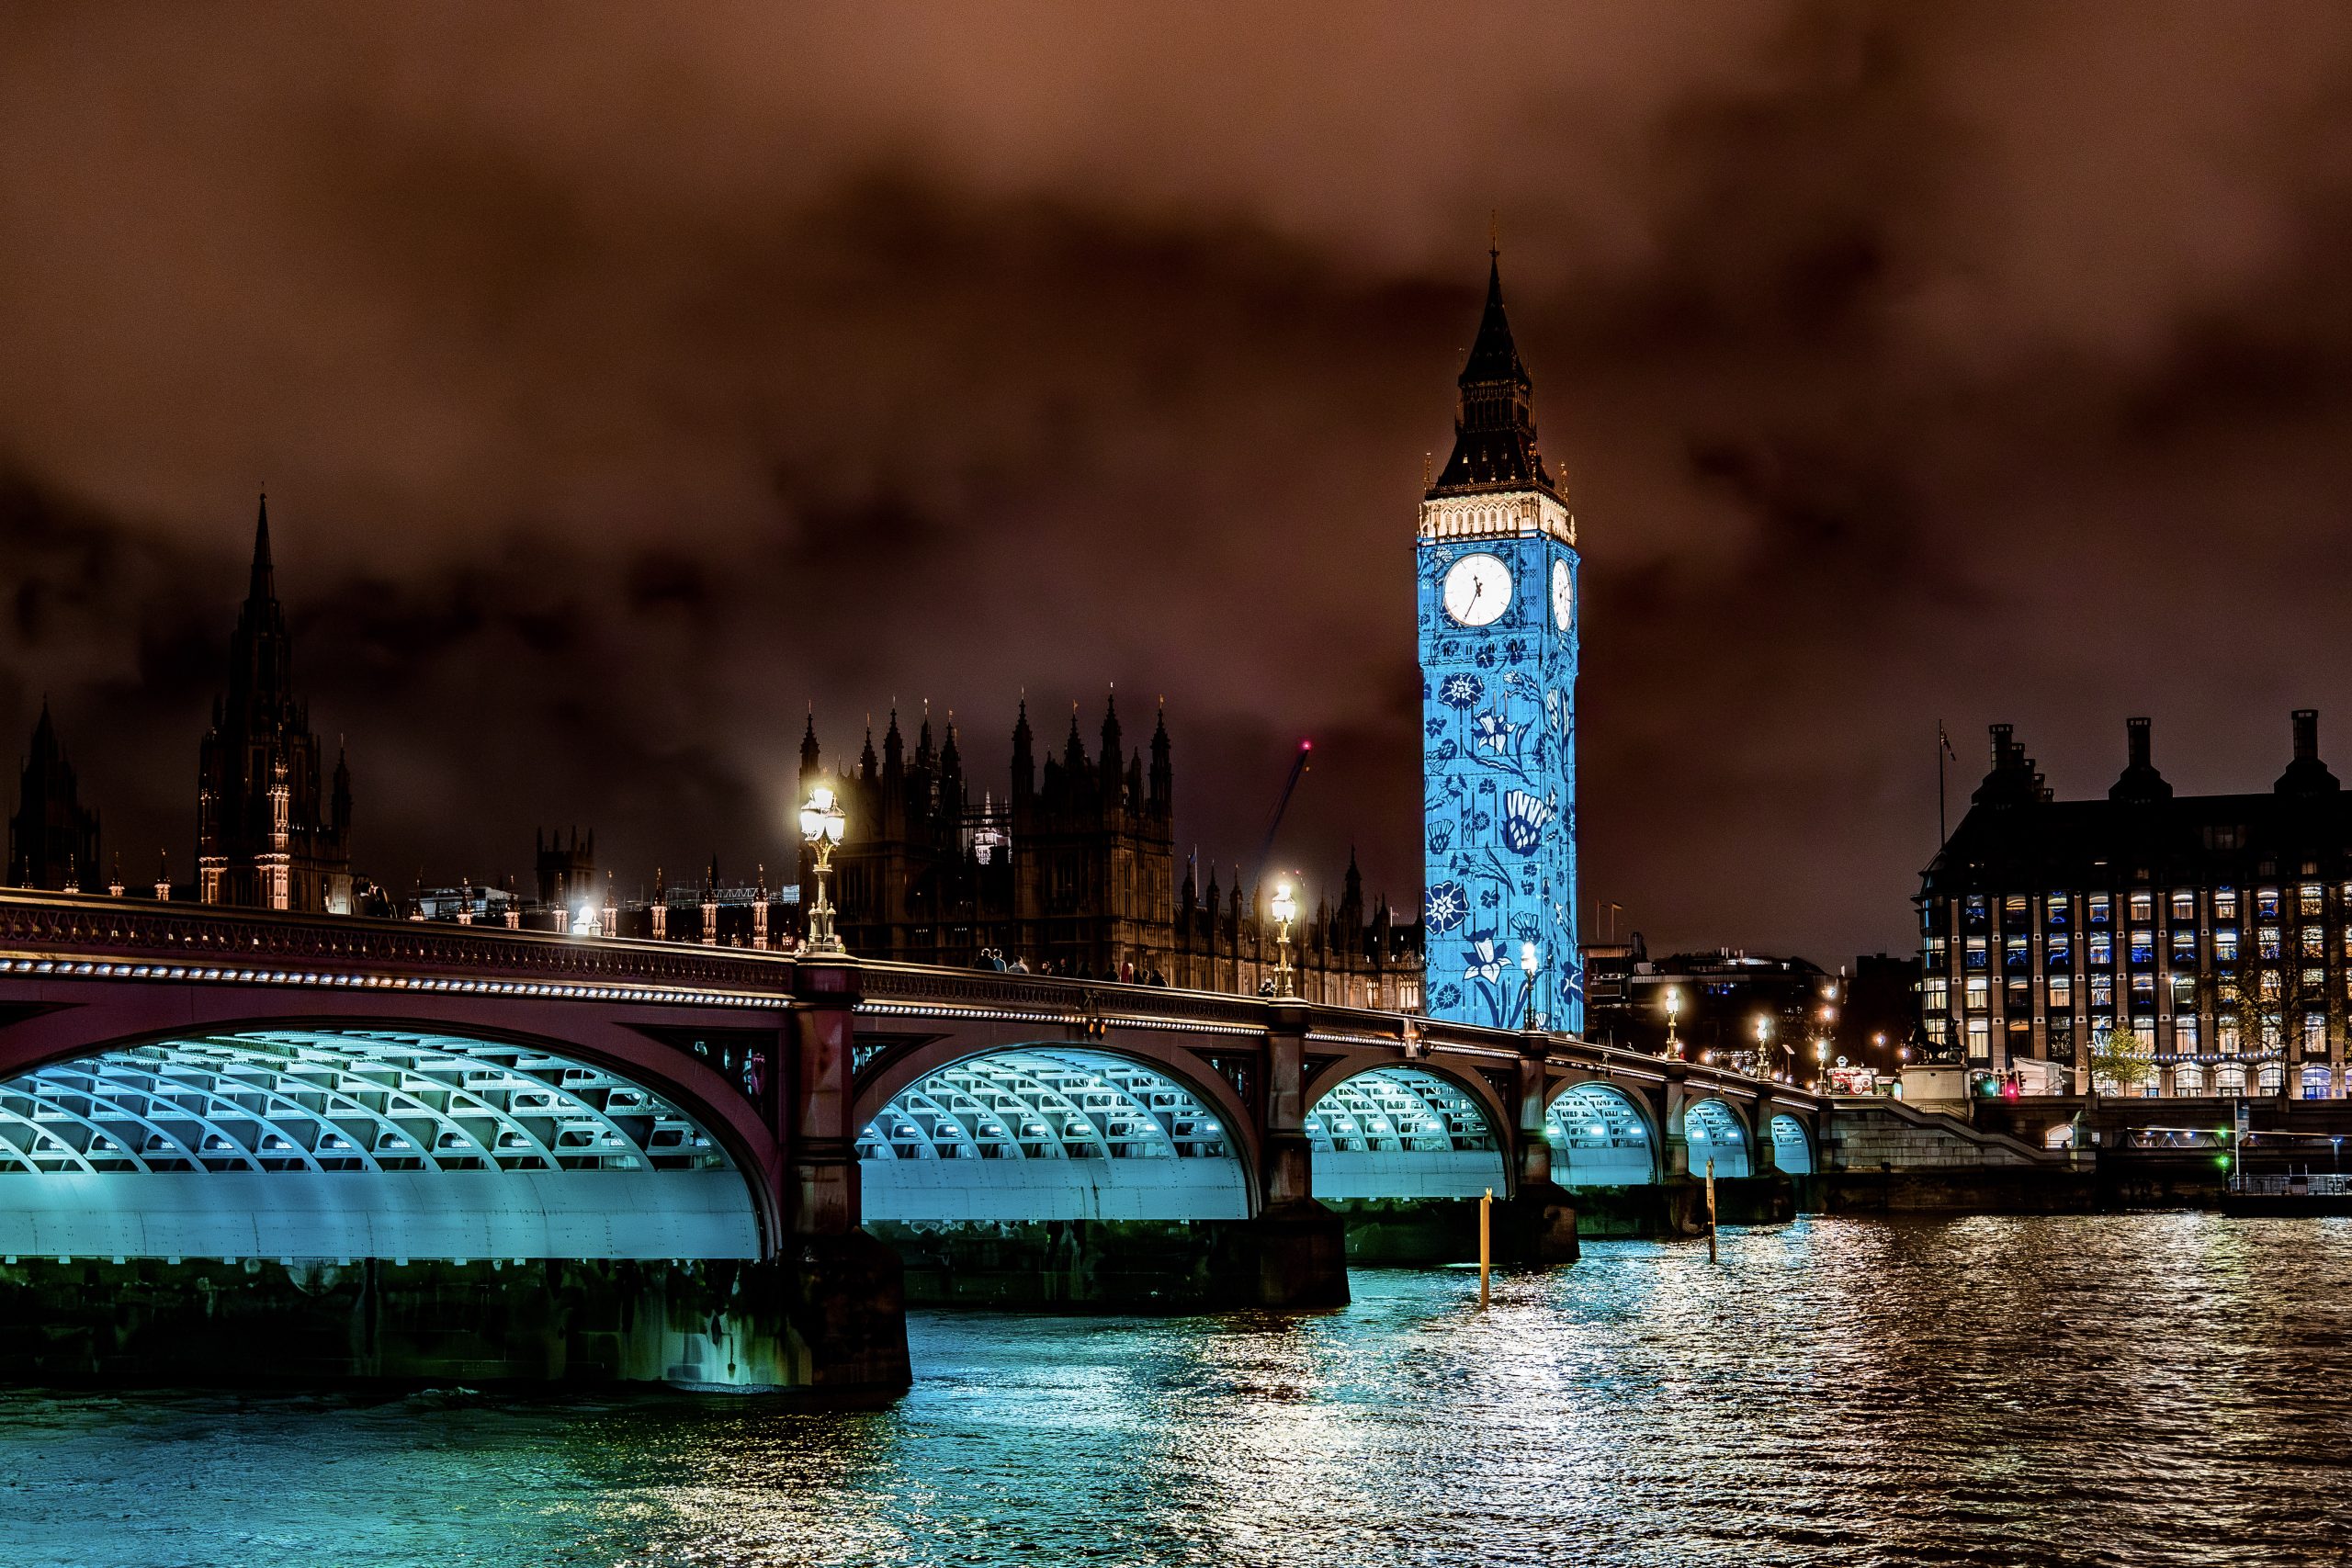 A bridge in London at night